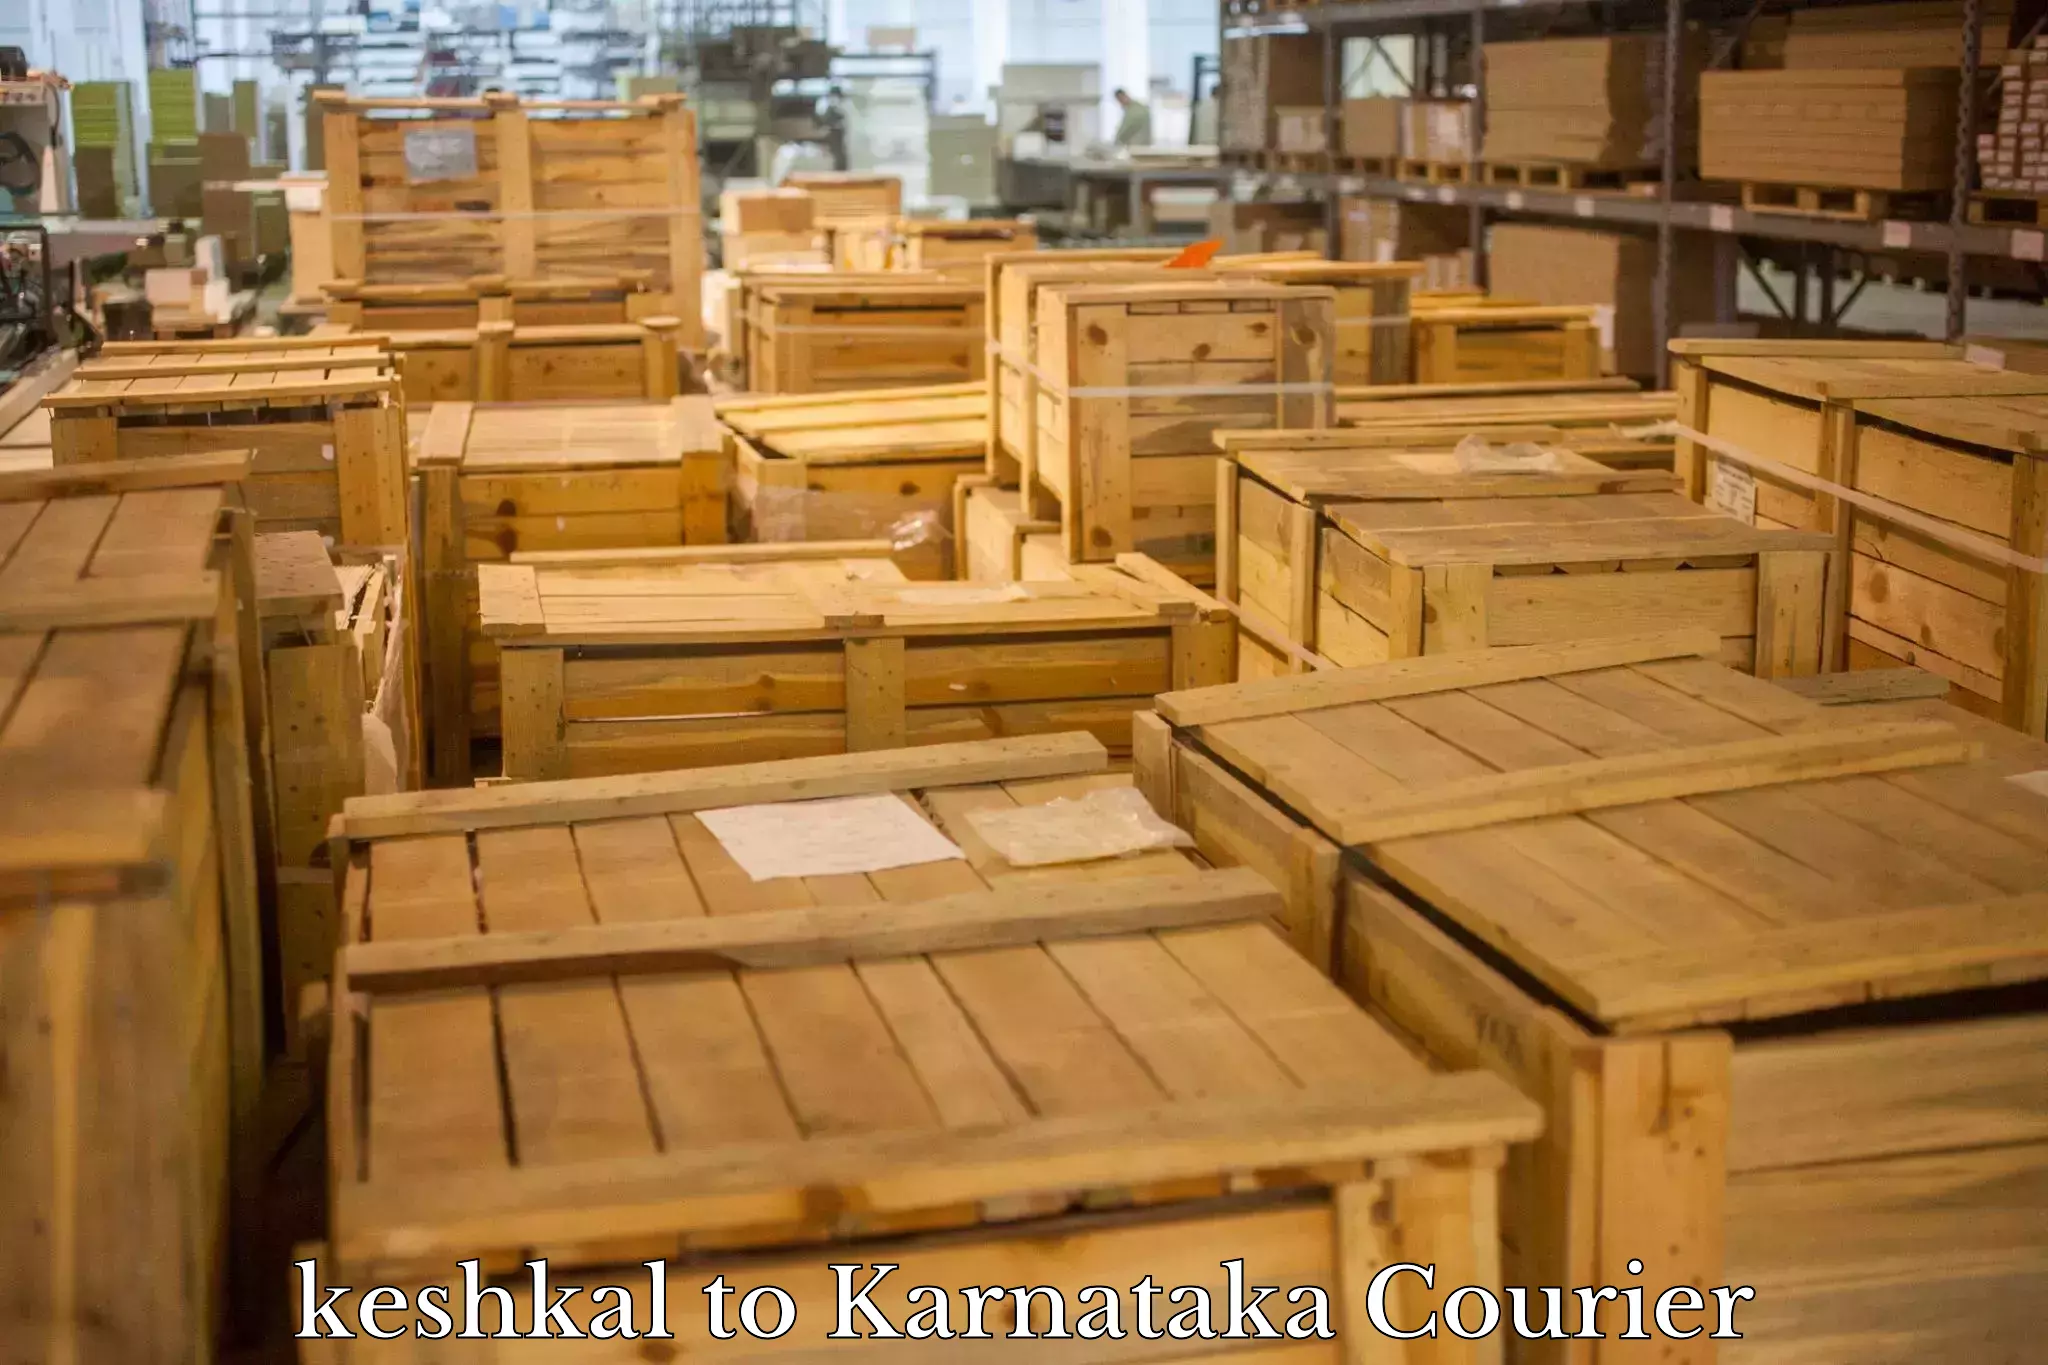 Efficient package consolidation keshkal to Karnataka